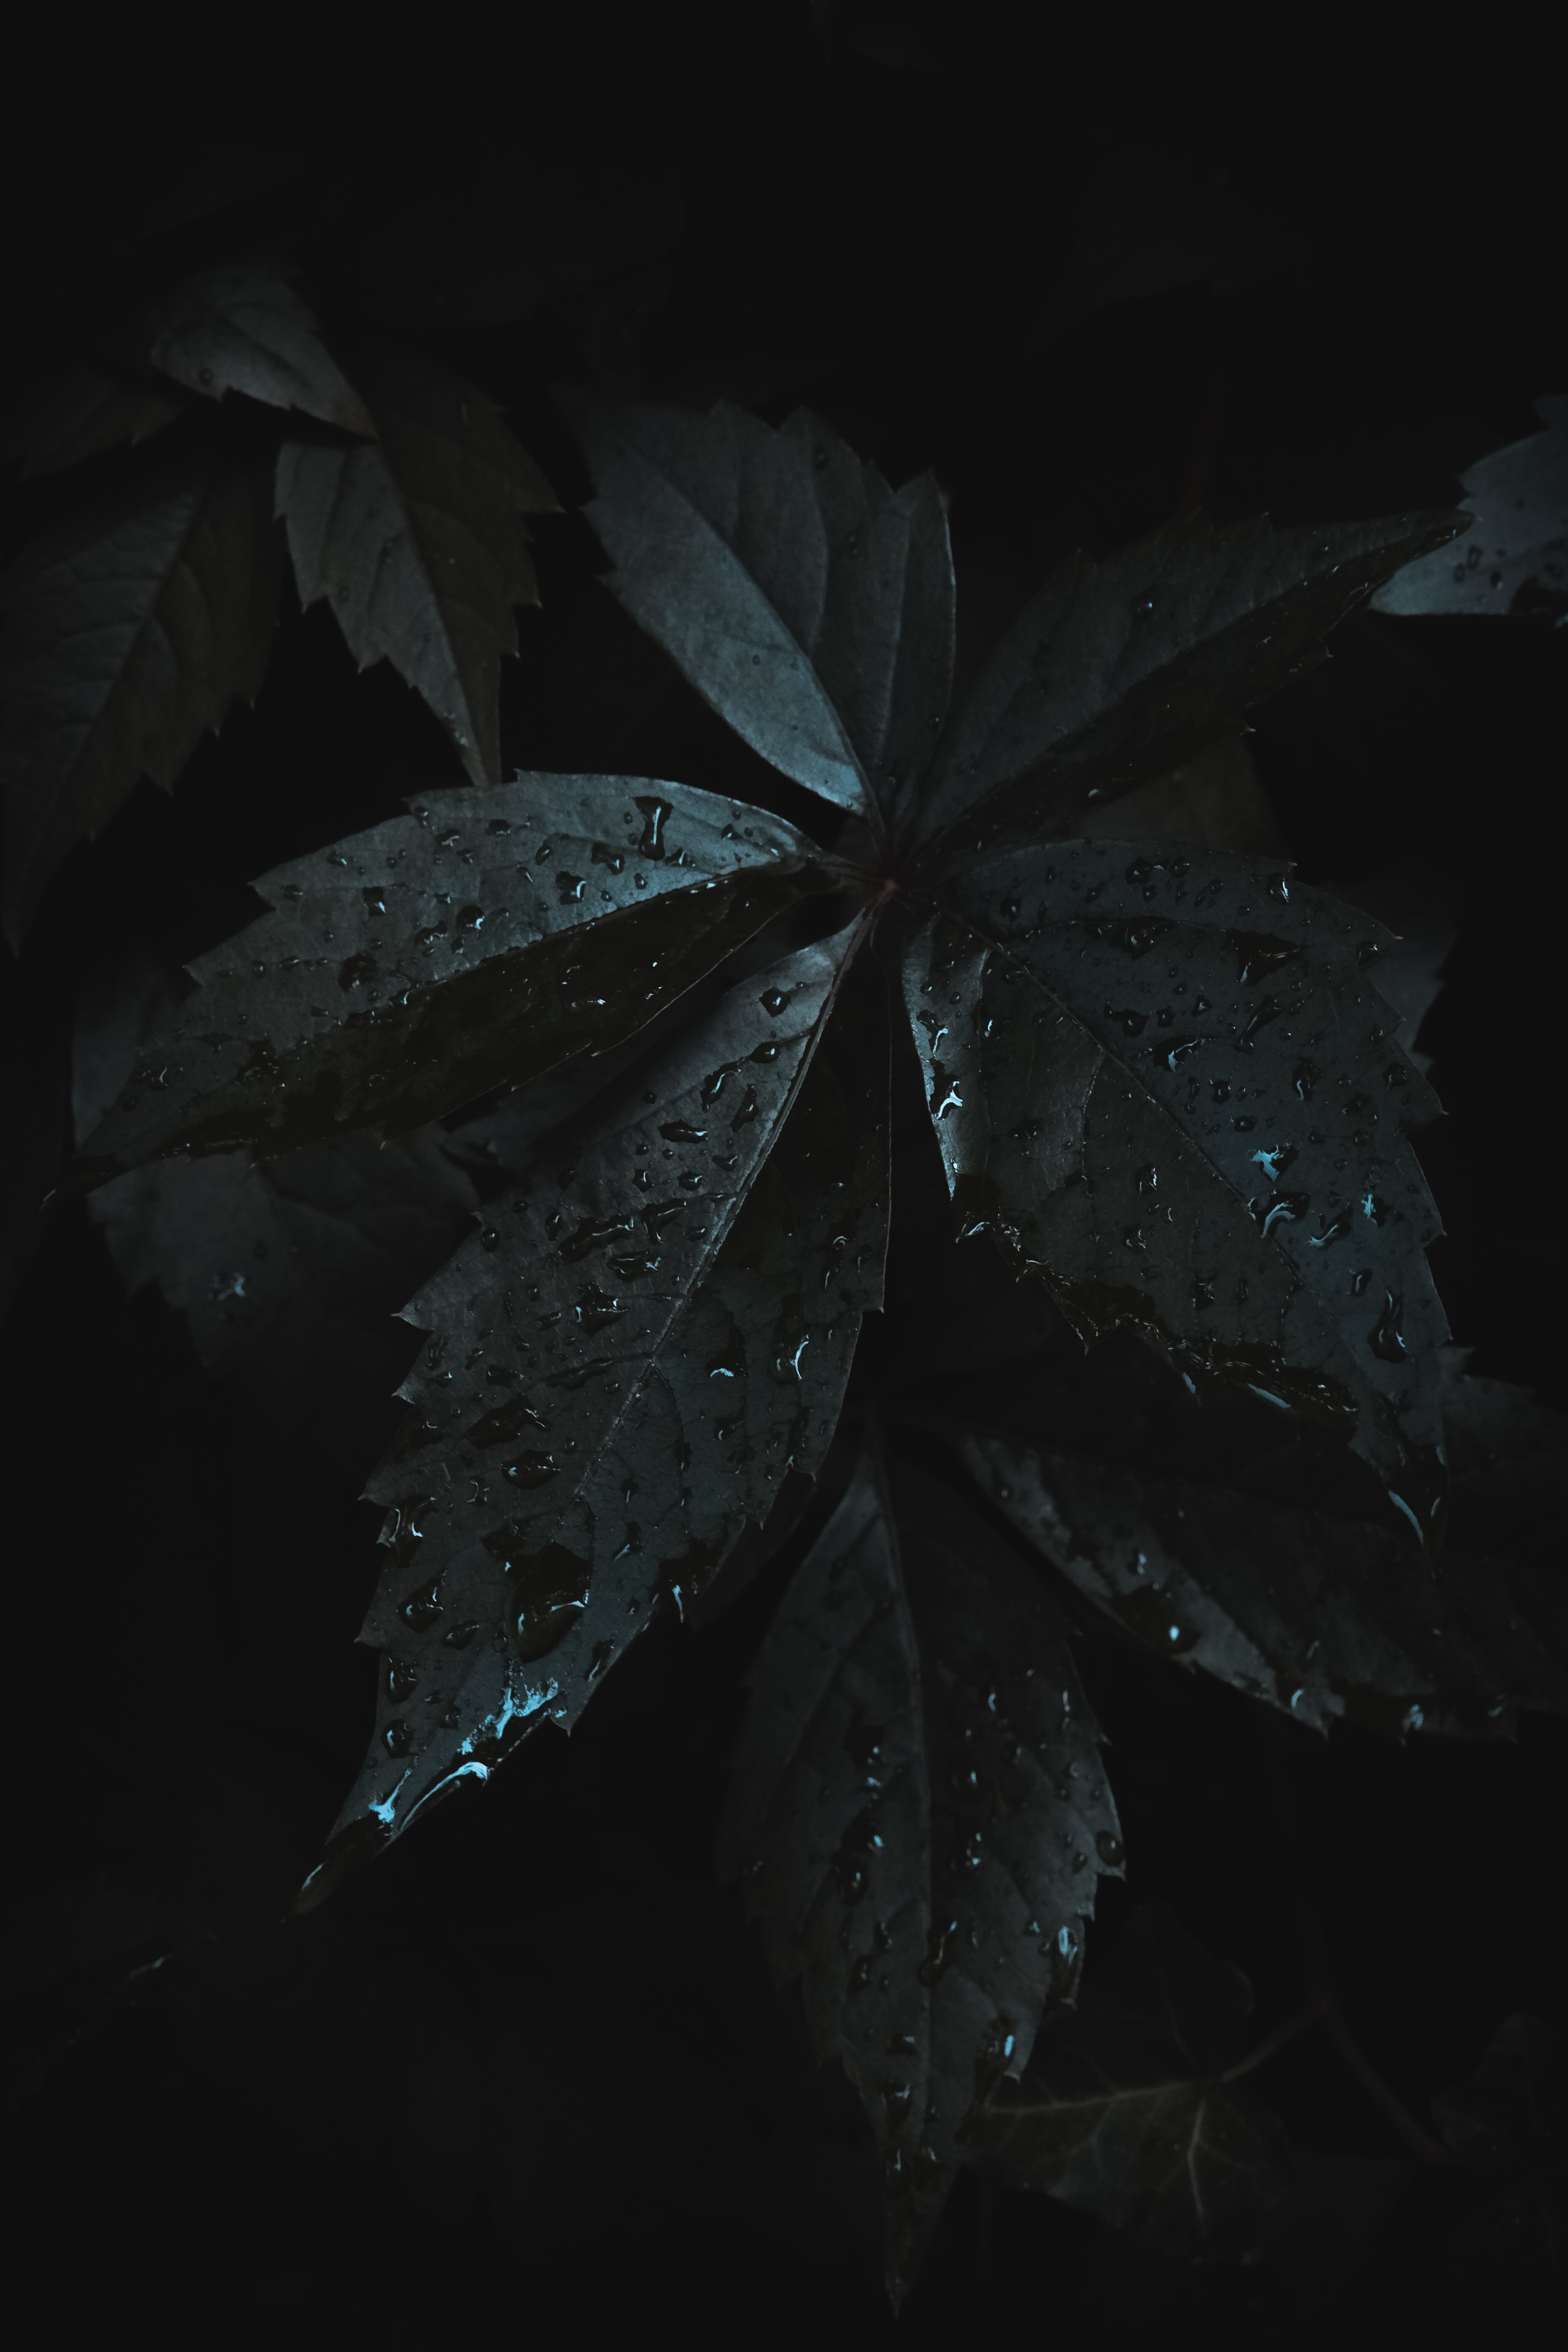 dark, moisture, macro, leaves, drops images